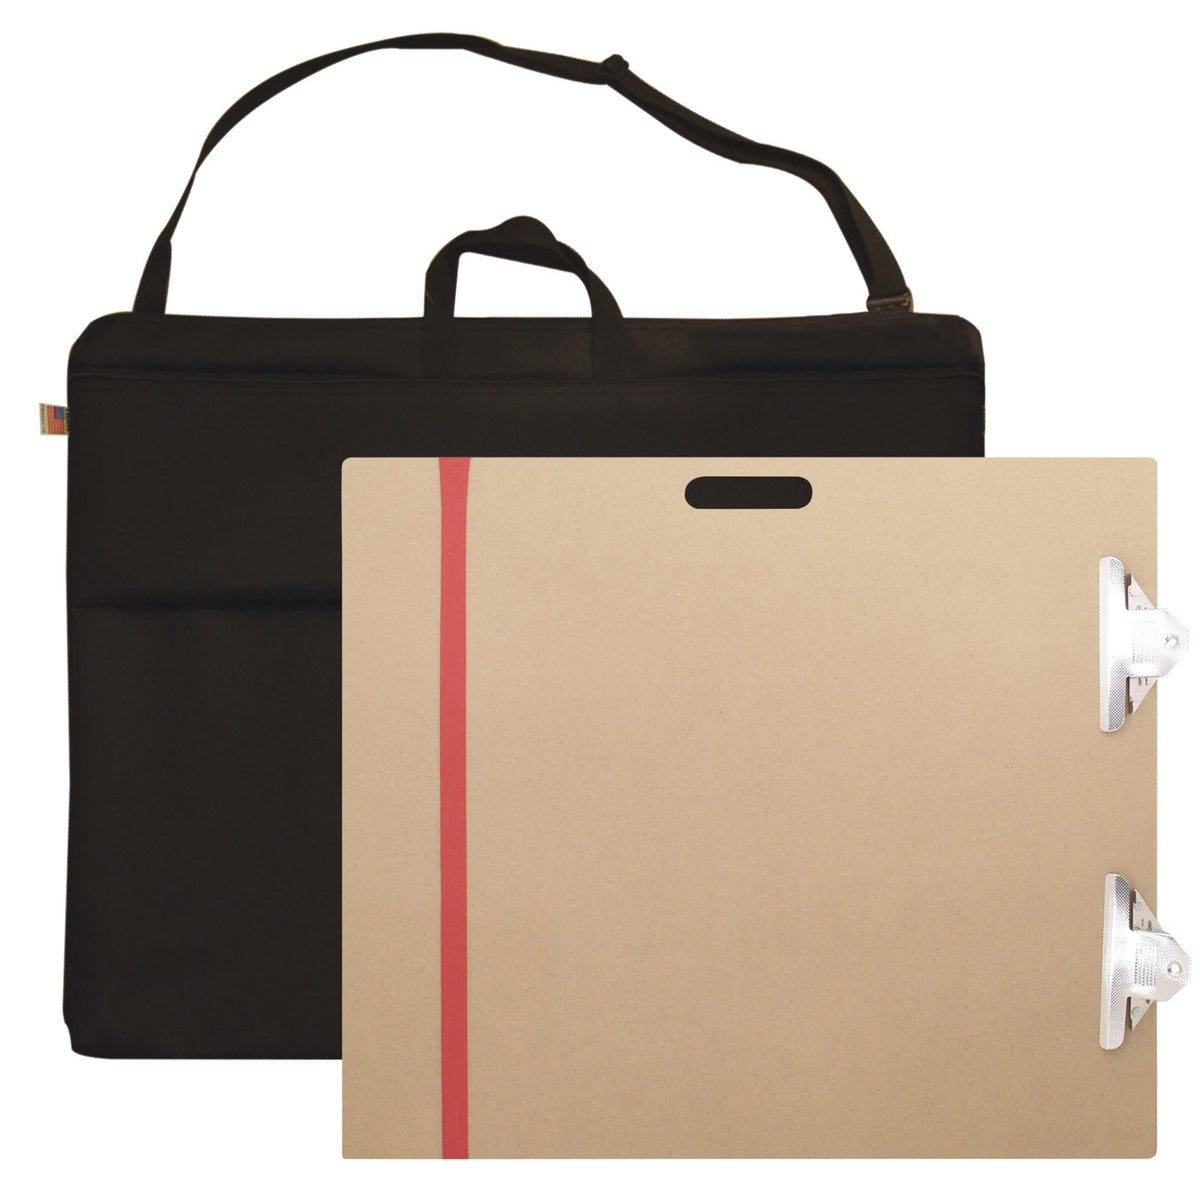 Tanchetta Leather Portfolio Bag | Leather Clutch Bag & Document Bag